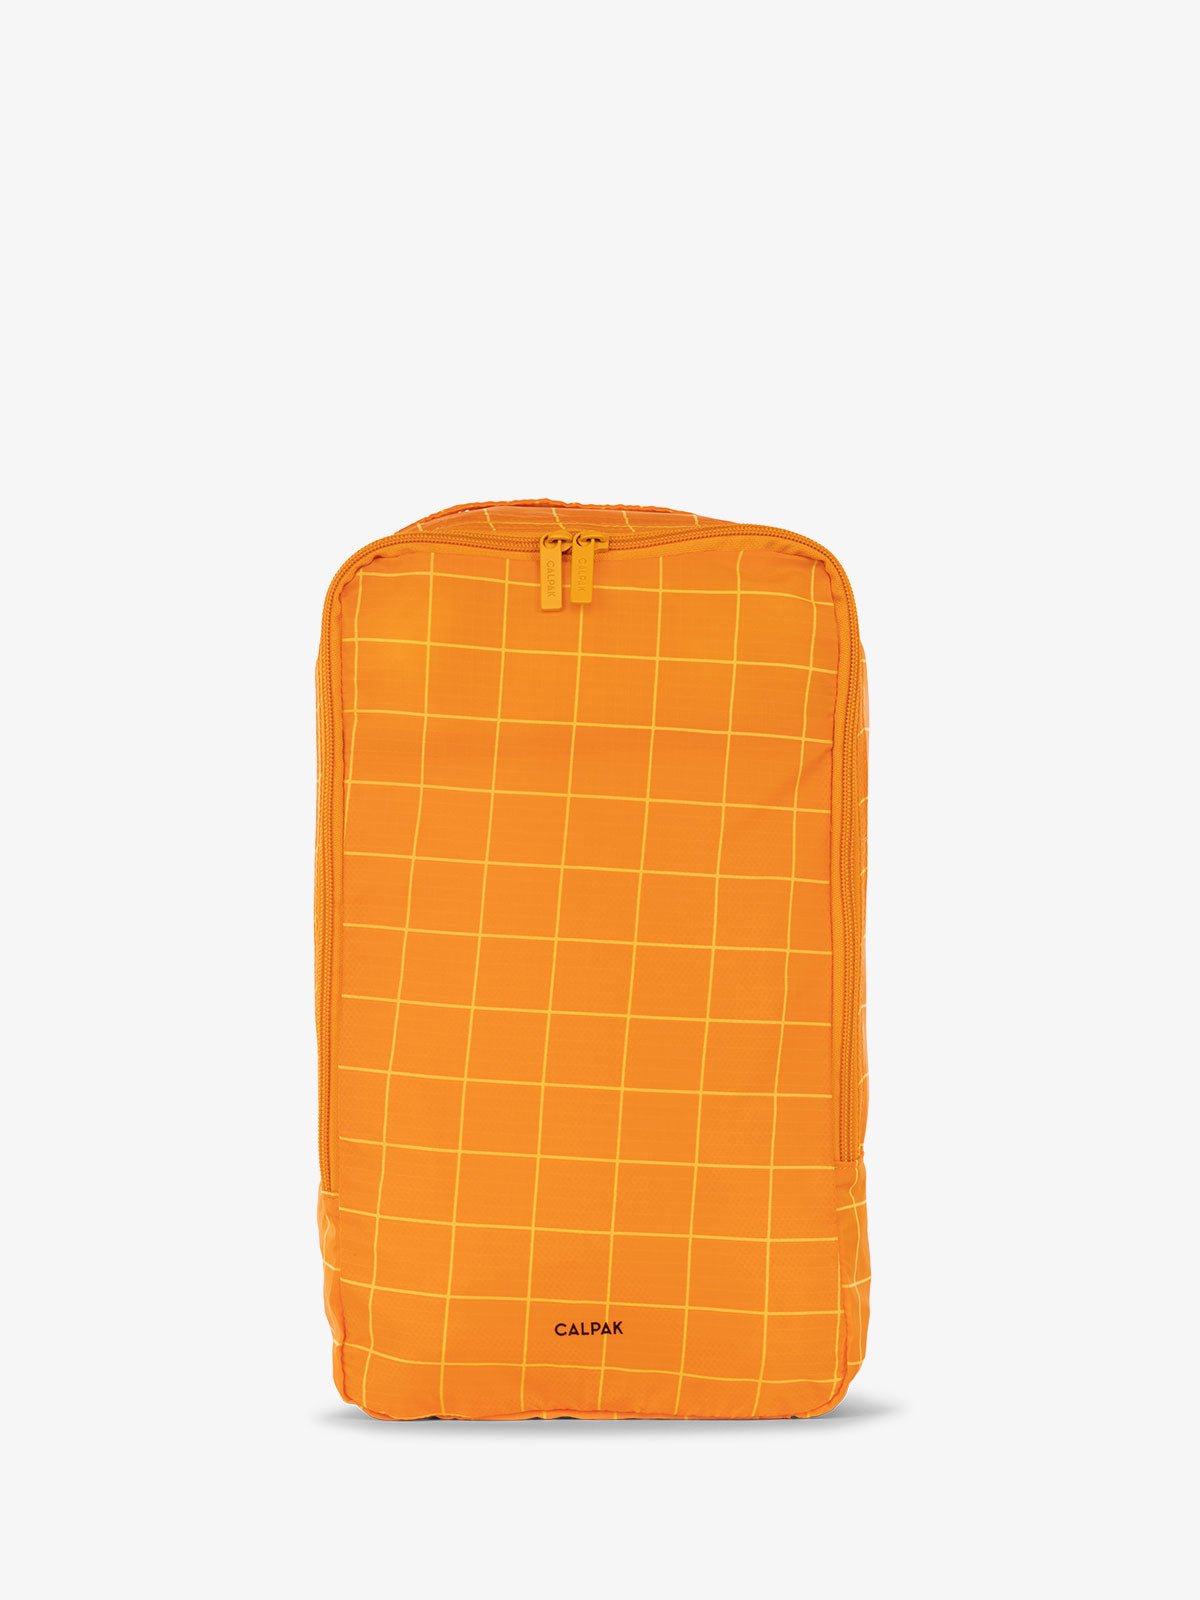 CALPAK Compakt shoe storage travel bag with handle in orange grid